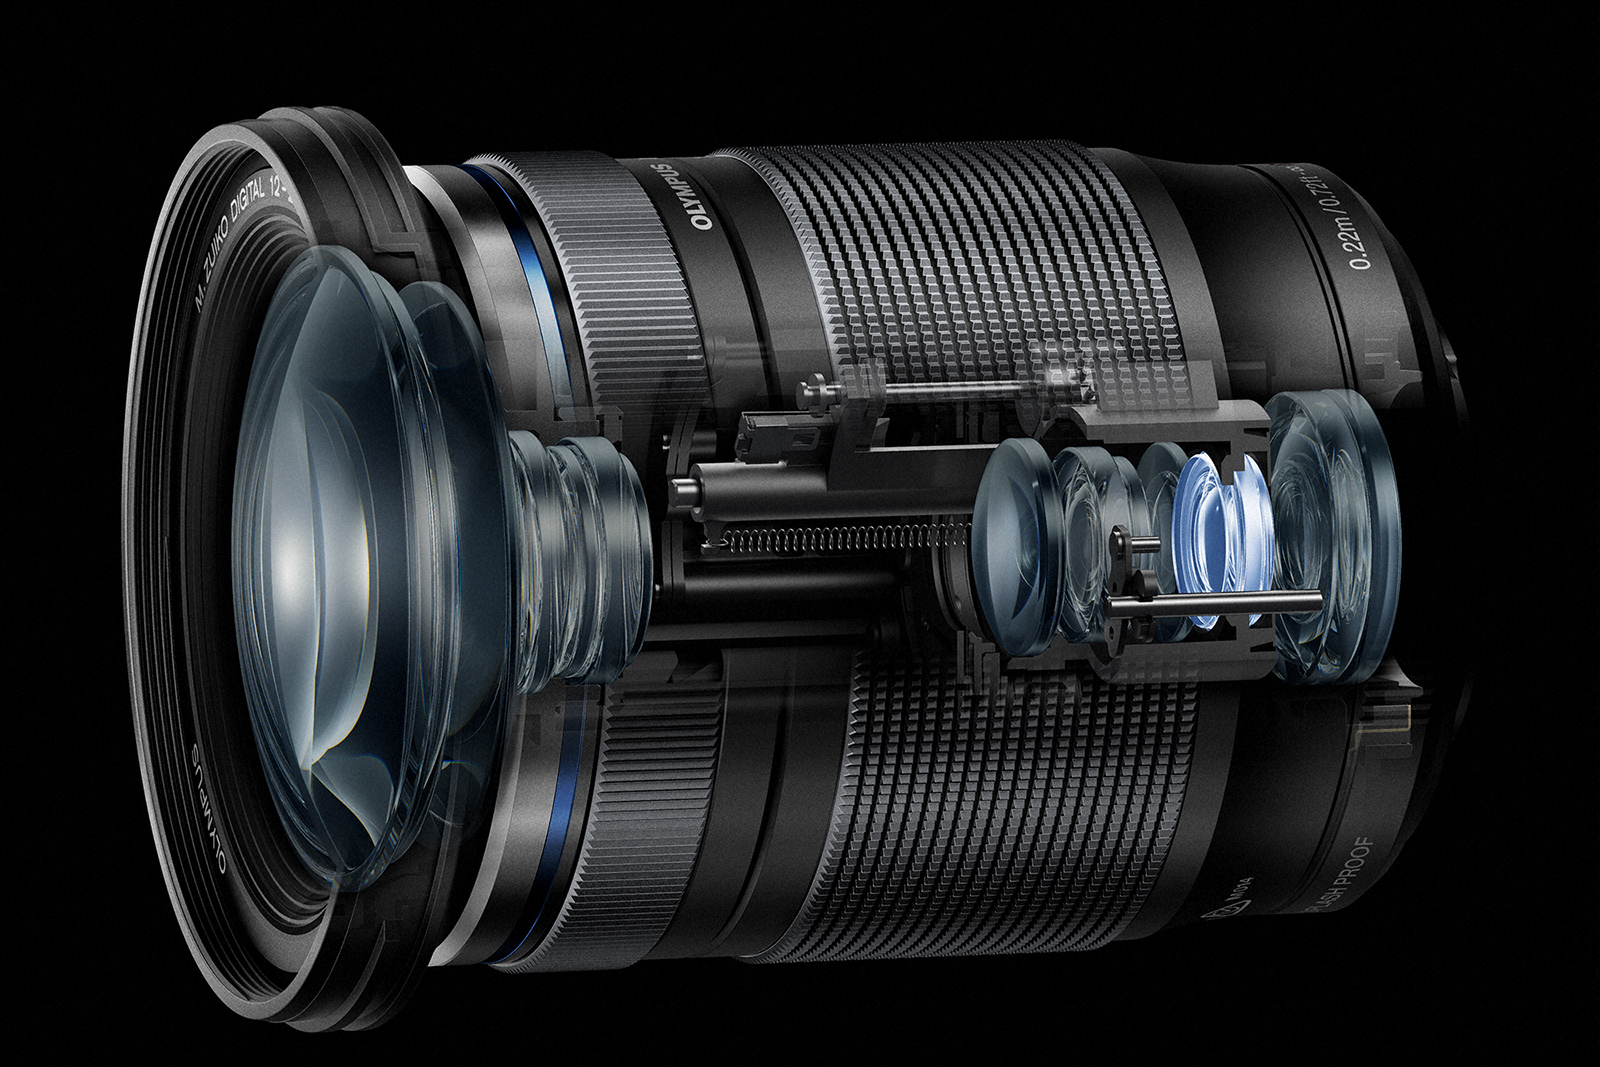 olympus mzuiko 12 200mm lens announced m zuiko digital ed f3 5 6 3 0009 focusing unit